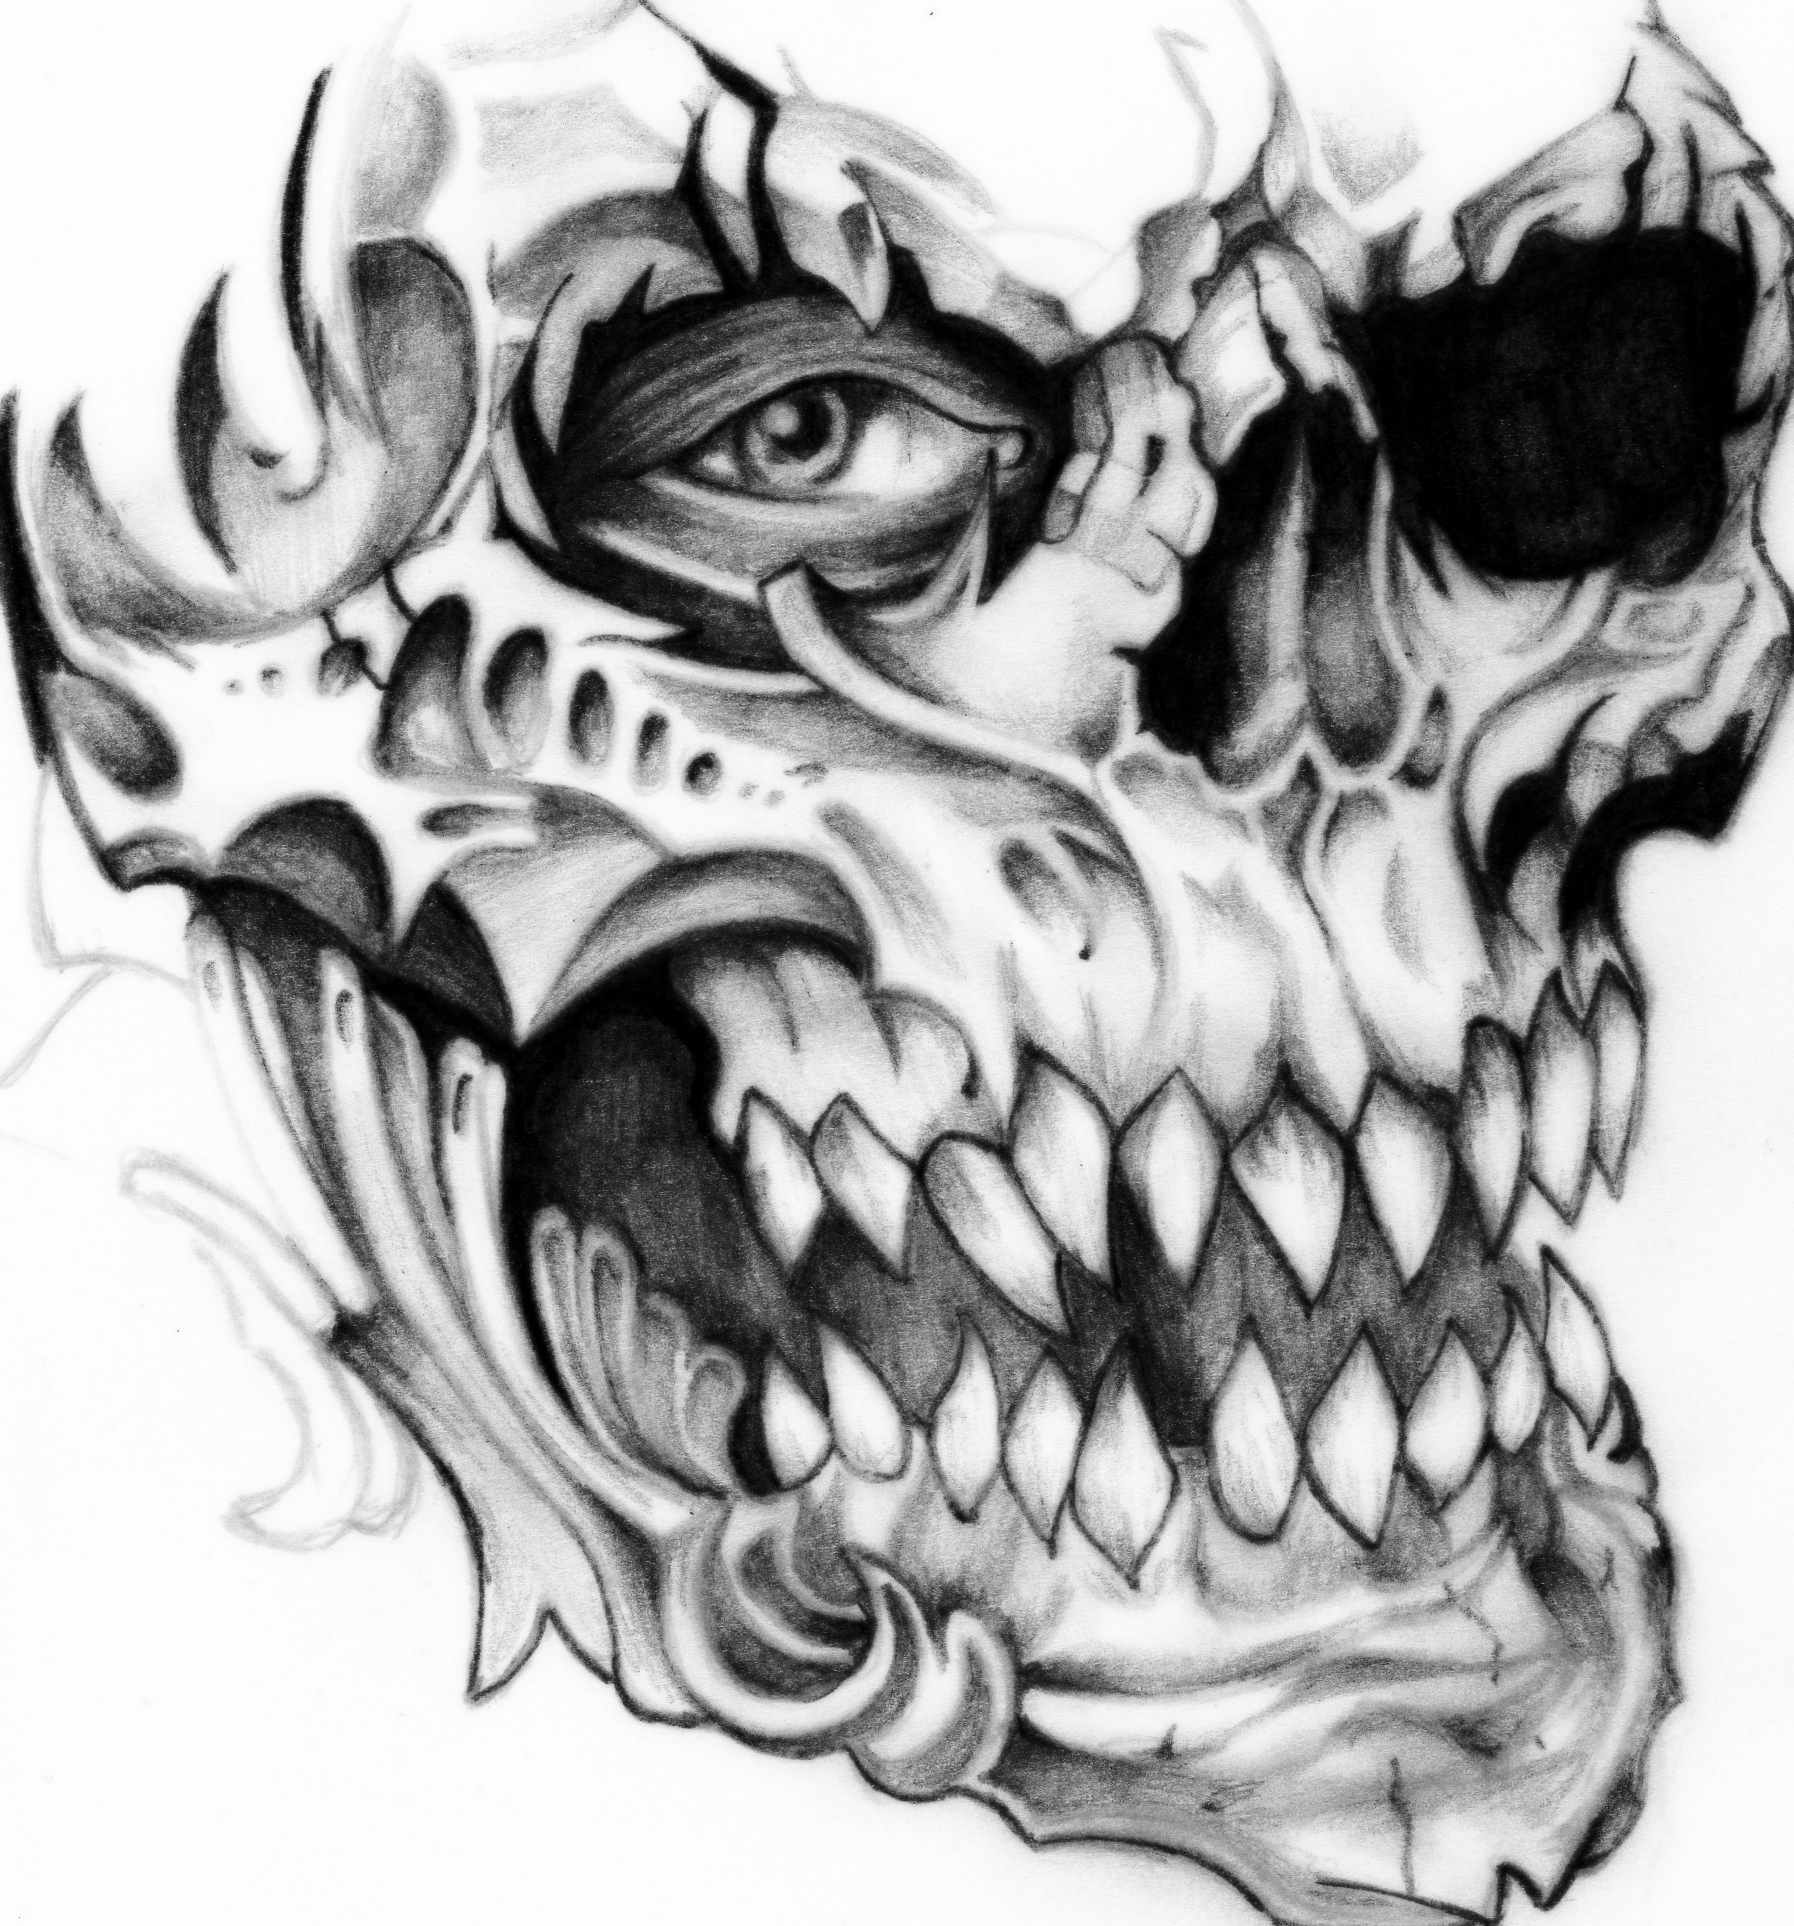 Memento Publishing - This #Memento Mori Skull tattoo caught our eye ;)  @browntattoo #finelinetattoo #skulltattoo #mementopublishing #artdriven  #tattoobooks #besttattoos #tattooartists #tattoovideos #tattooeducation  #tattooideas @tattooprodigies ...